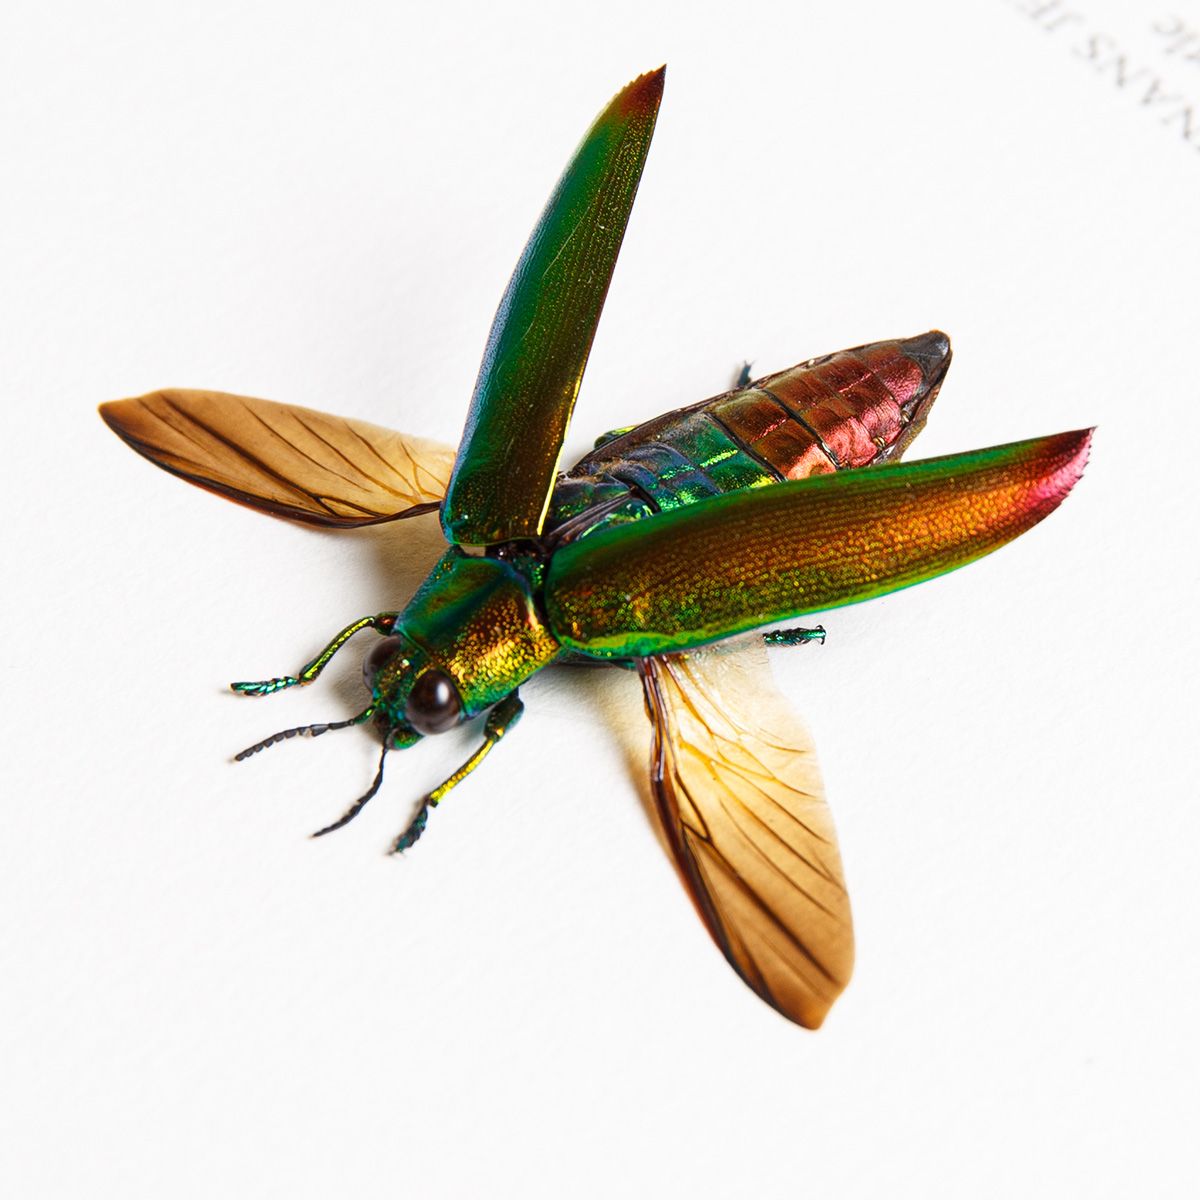 Jember Jewel Beetle in Box Frame (Chrysochroa fulminans jember)